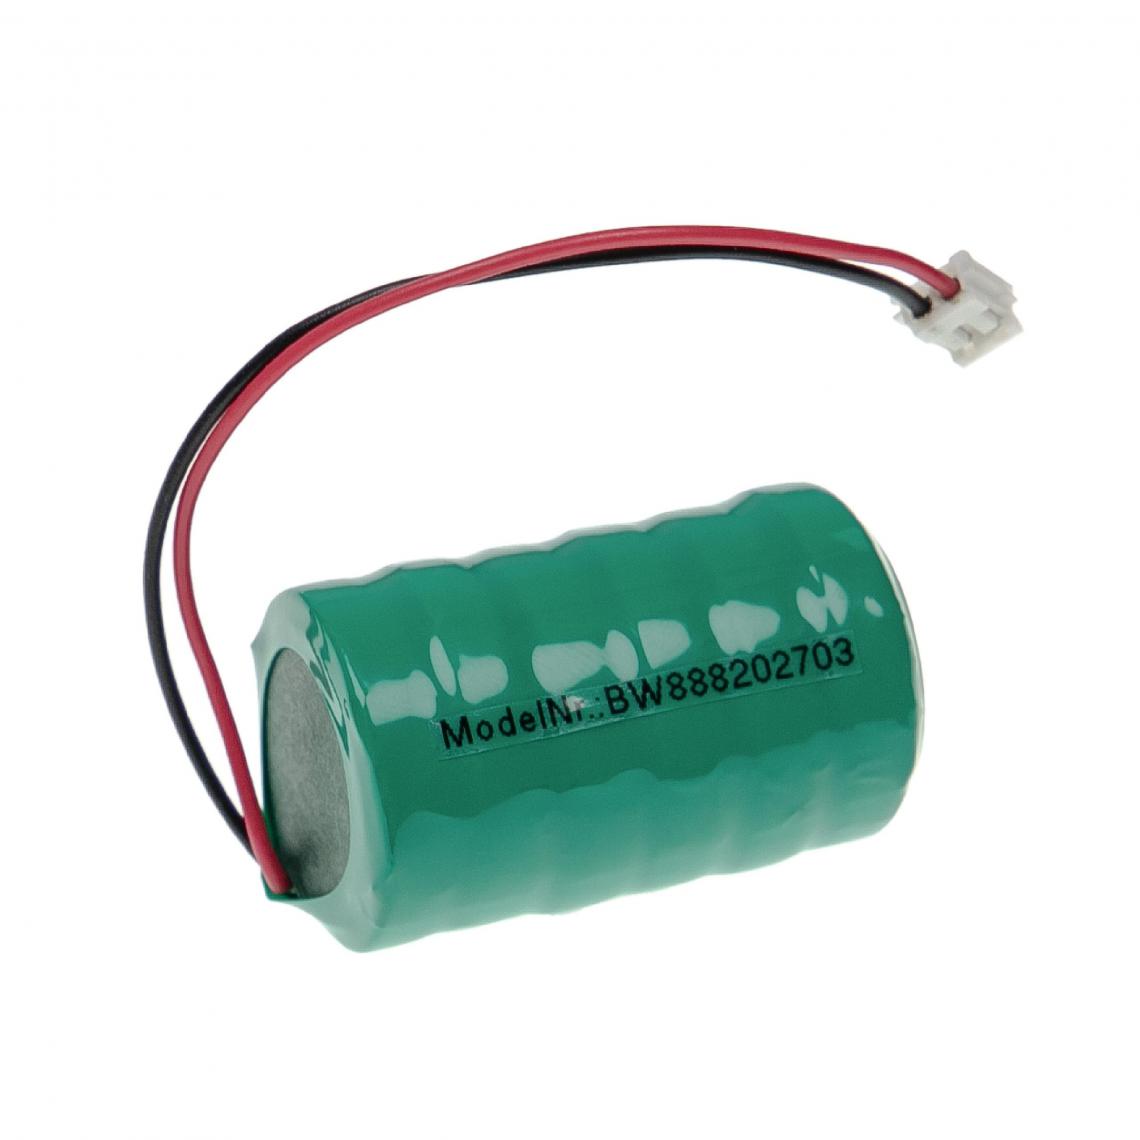 Vhbw - vhbw Batterie compatible avec IMX Free DOP Probe, Freedrop Foetal Doppler MB413 appareil médical (230mAh, 7,2V, NiMH) - Piles spécifiques